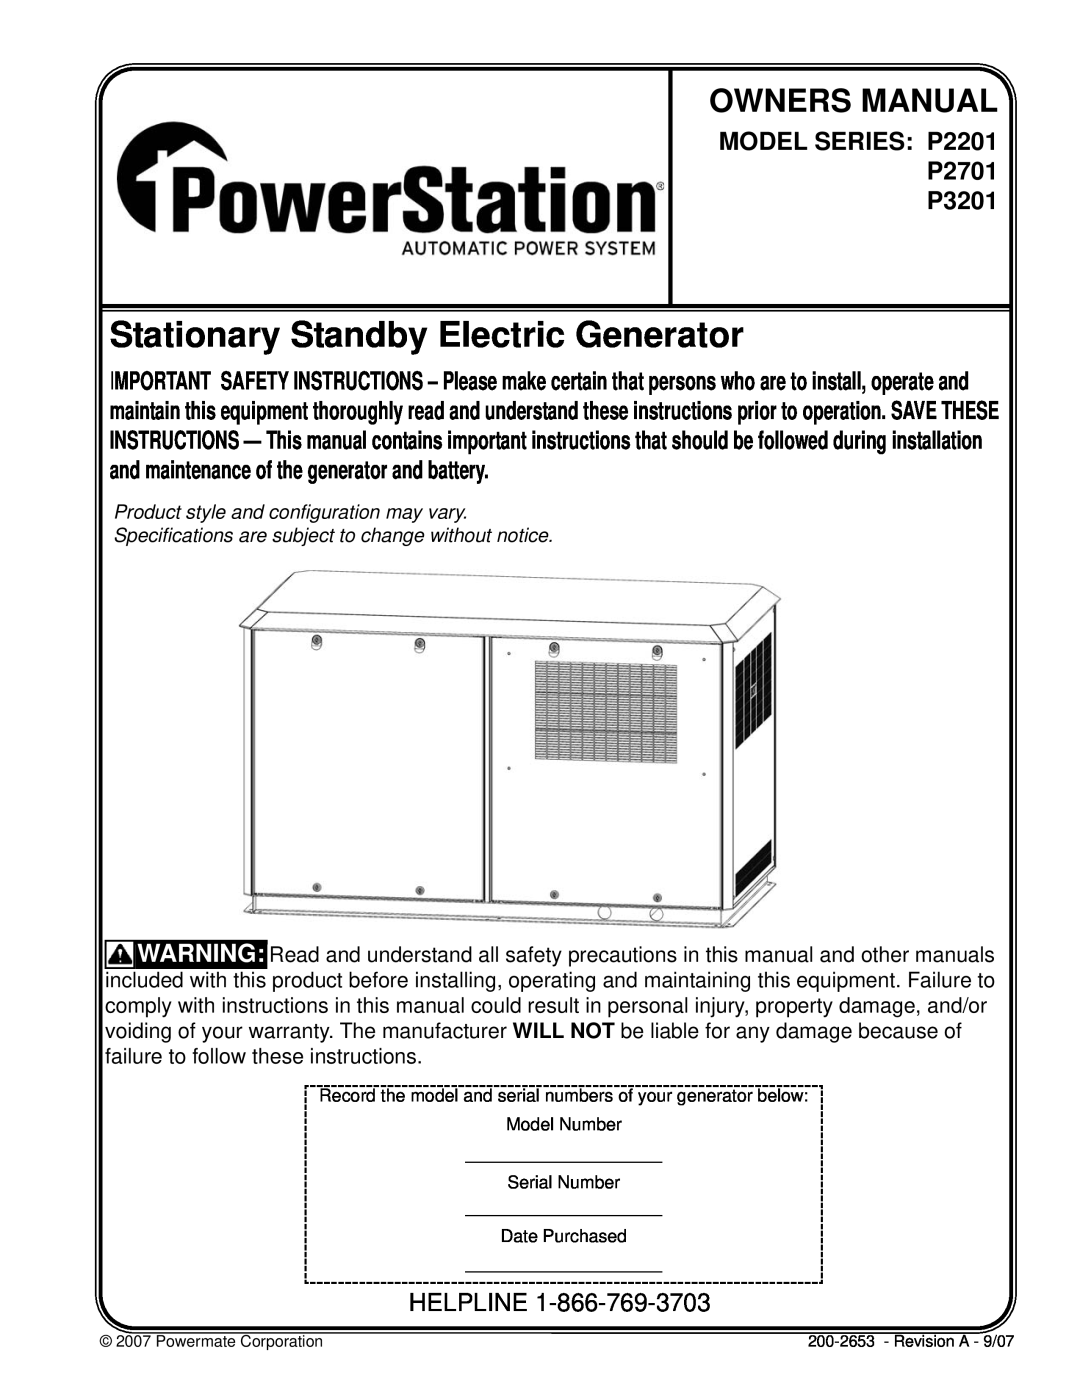 Powermate owner manual MODEL SERIES P2201 P2701 P3201, Stationary Standby Electric Generator, Owners Manual, Helpline 